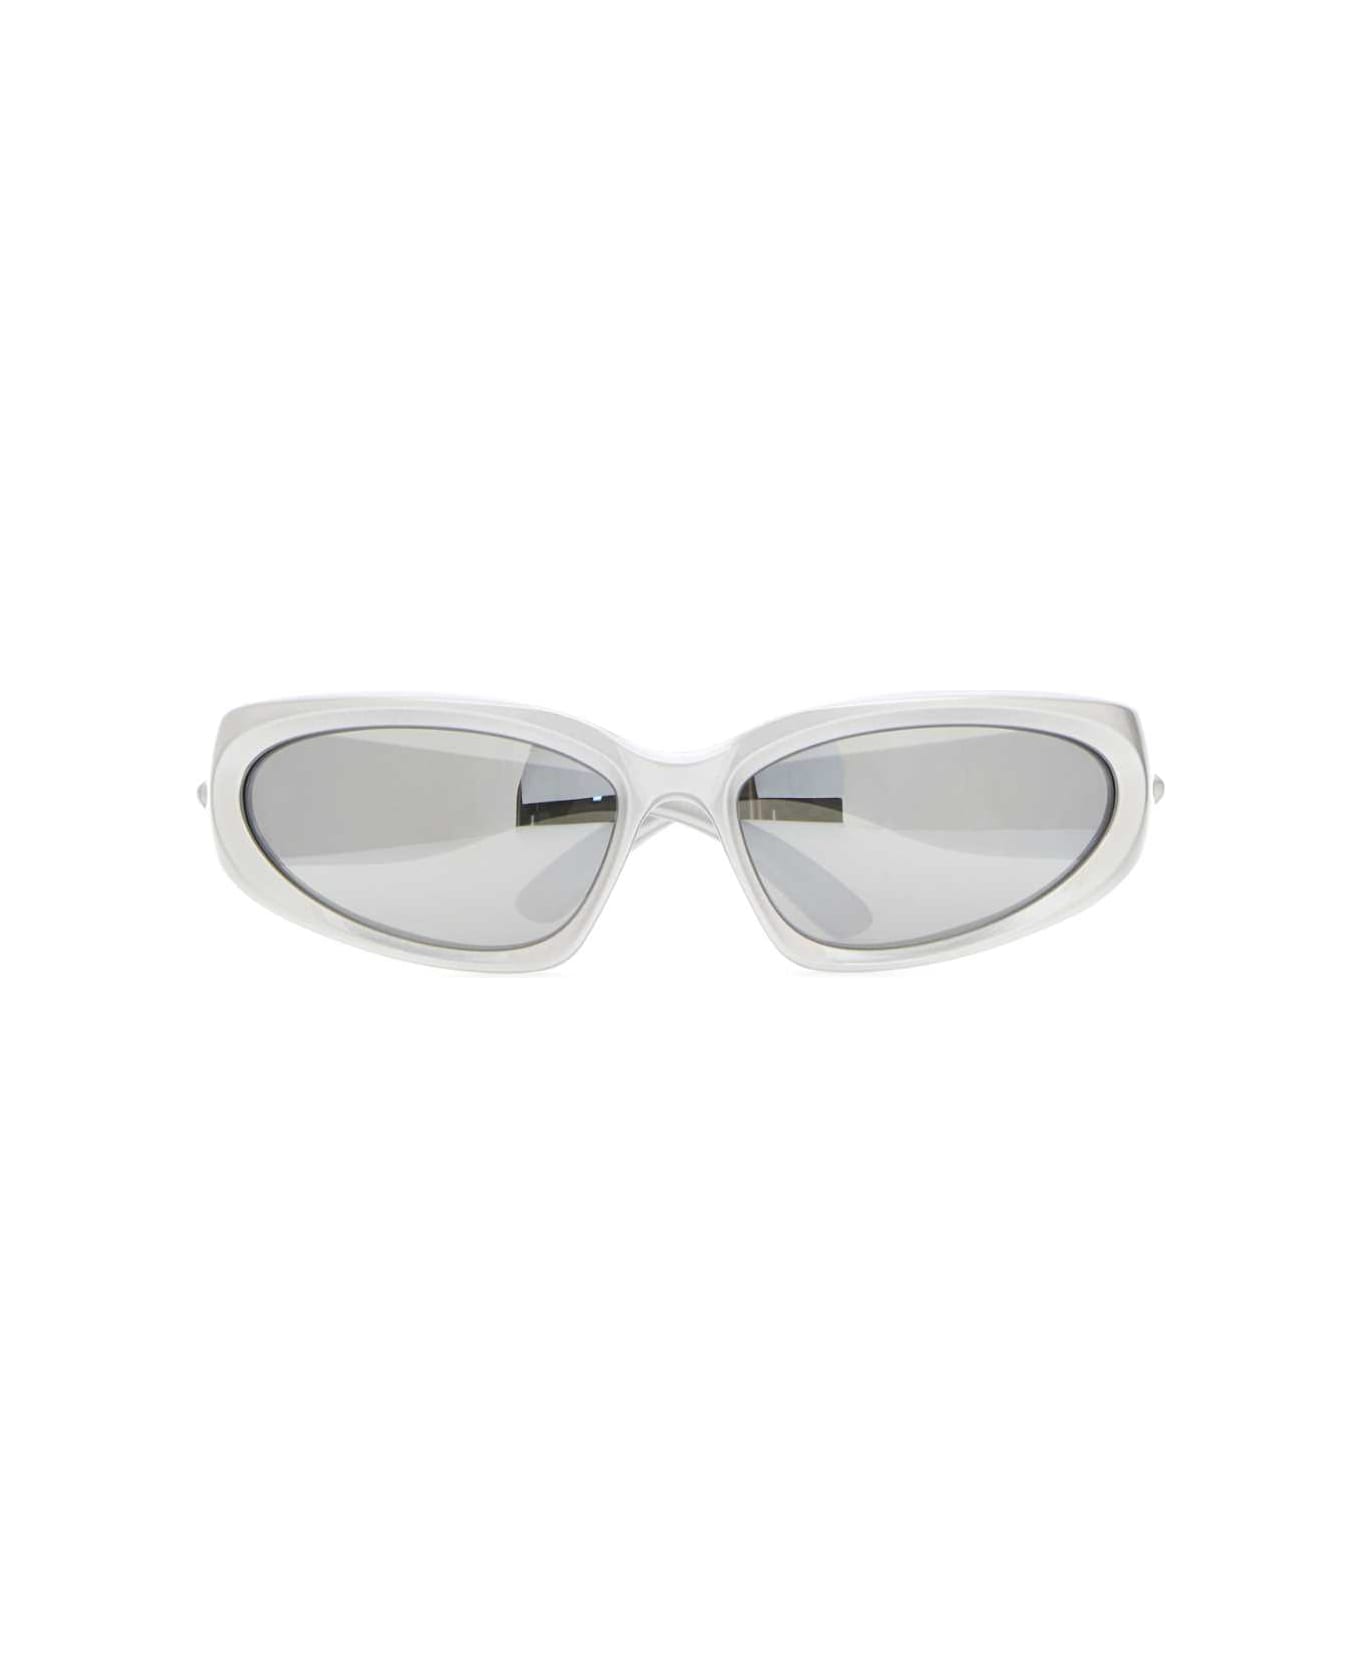 Balenciaga Silver Acetate Swift Oval Sunglasses - 1402